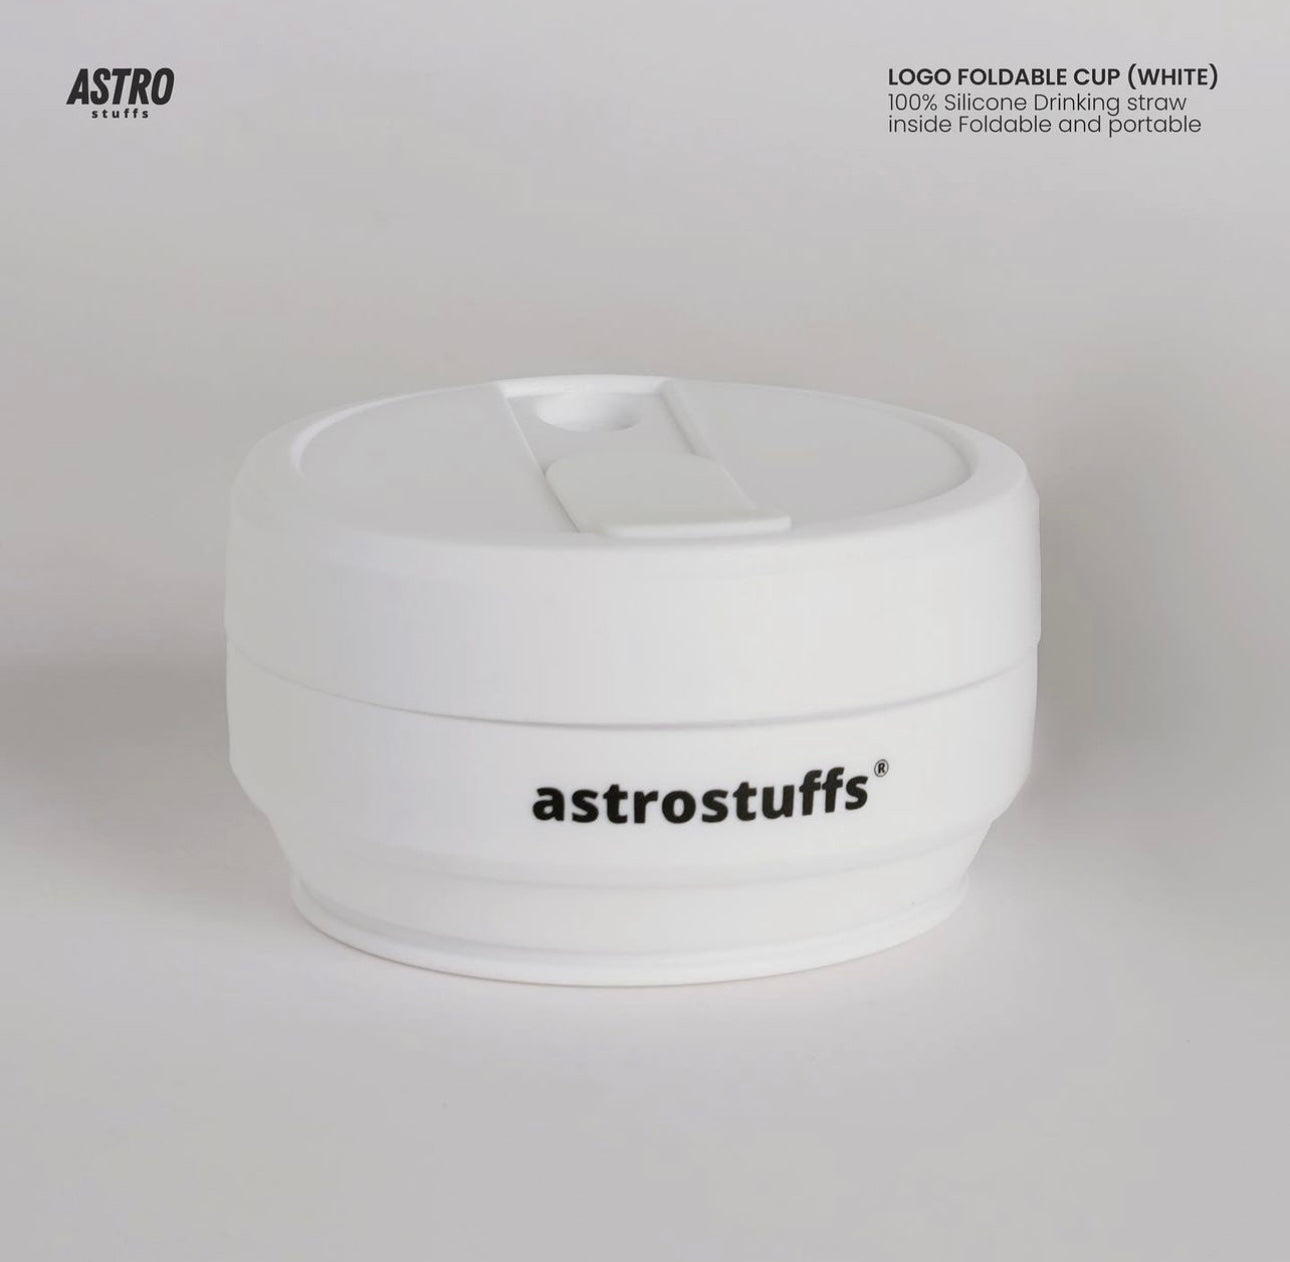 bright AstroStuffs logo folderble cup